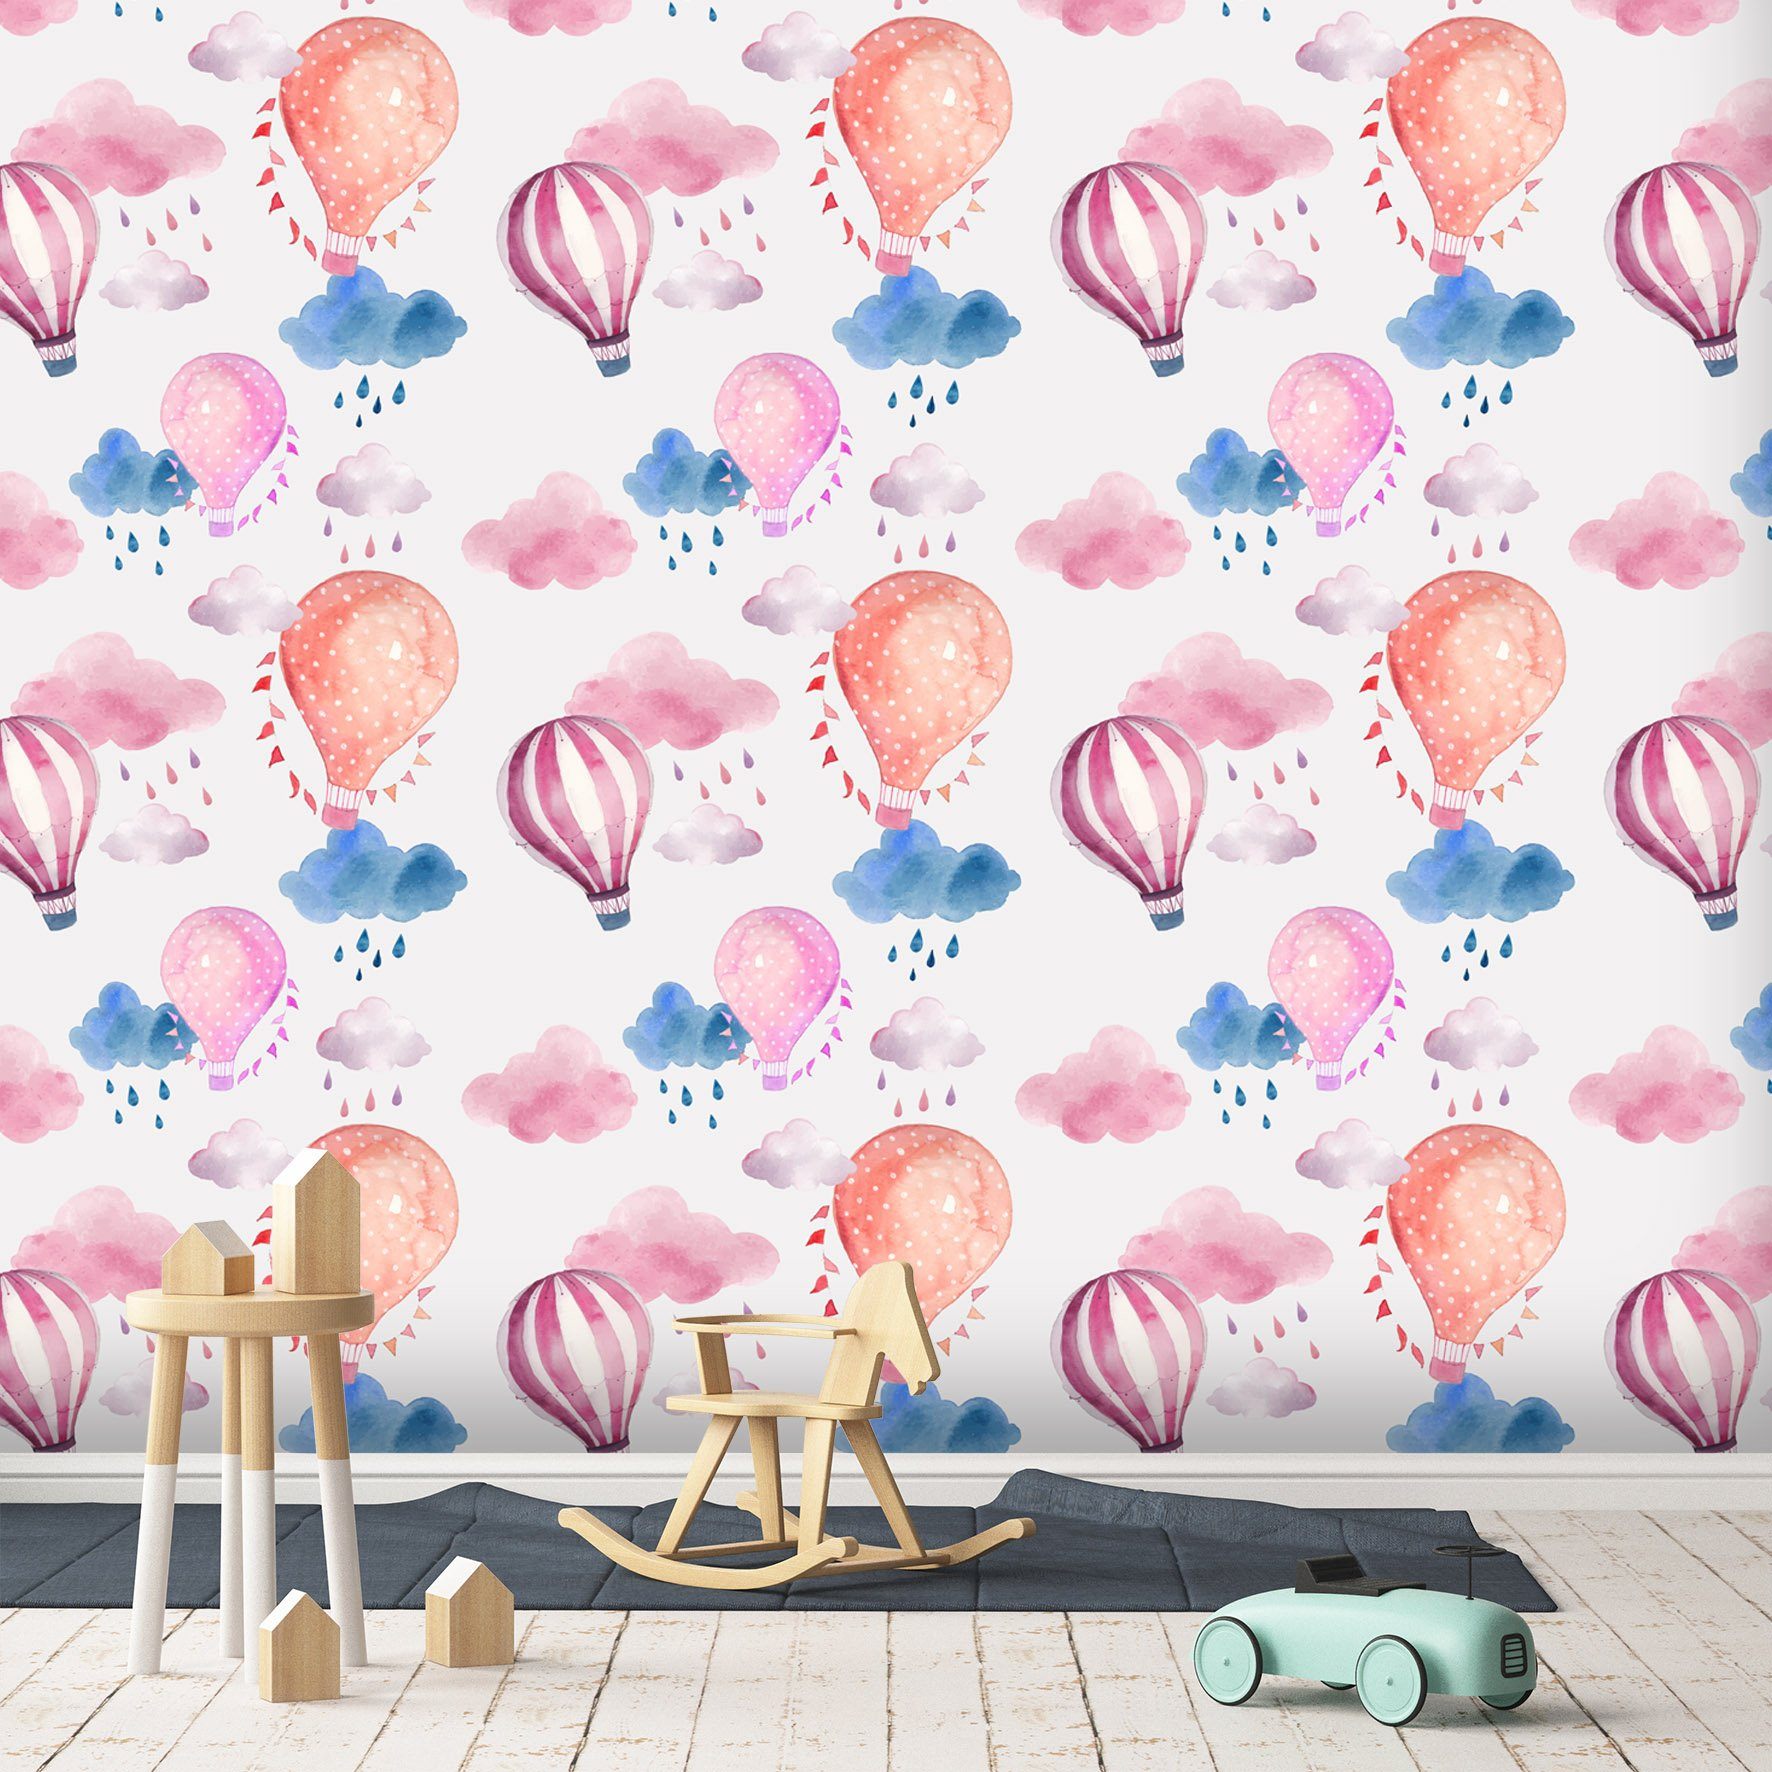 3D Hot Air Balloon 029 Wallpaper AJ Wallpaper 